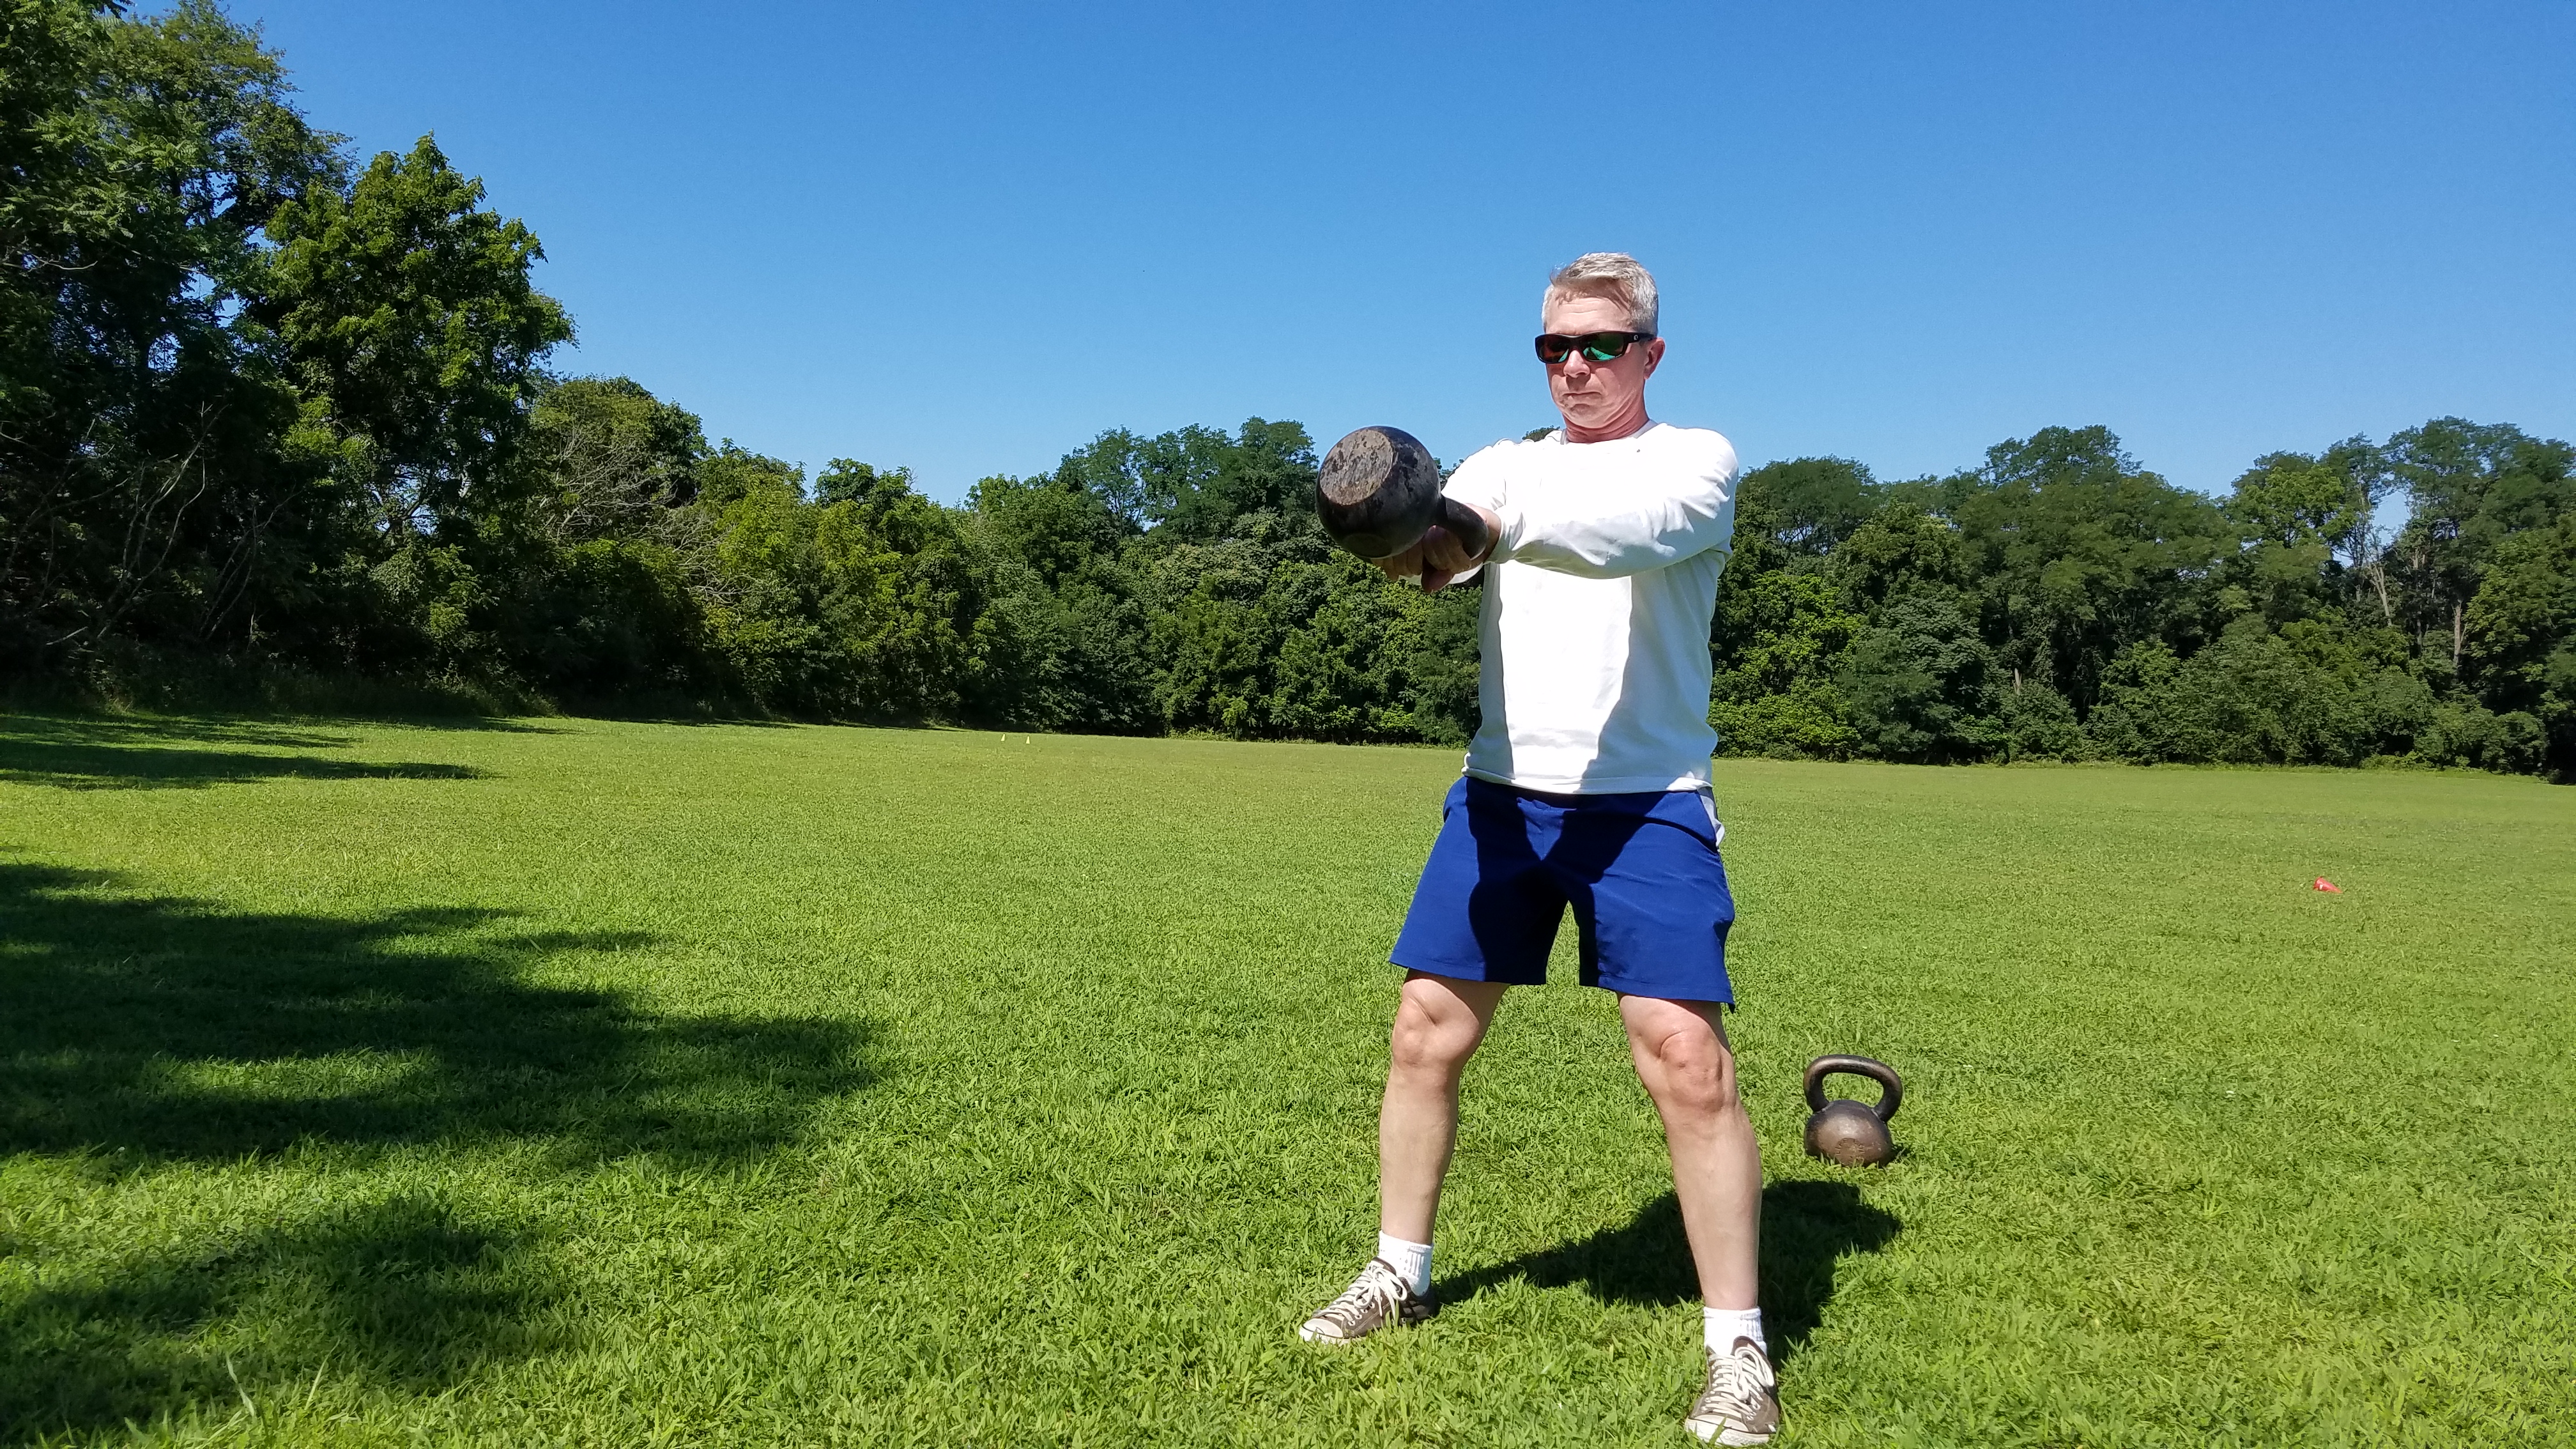 mark mellohusky kettlebell swing tutorial outdoor workout seven stars fitness